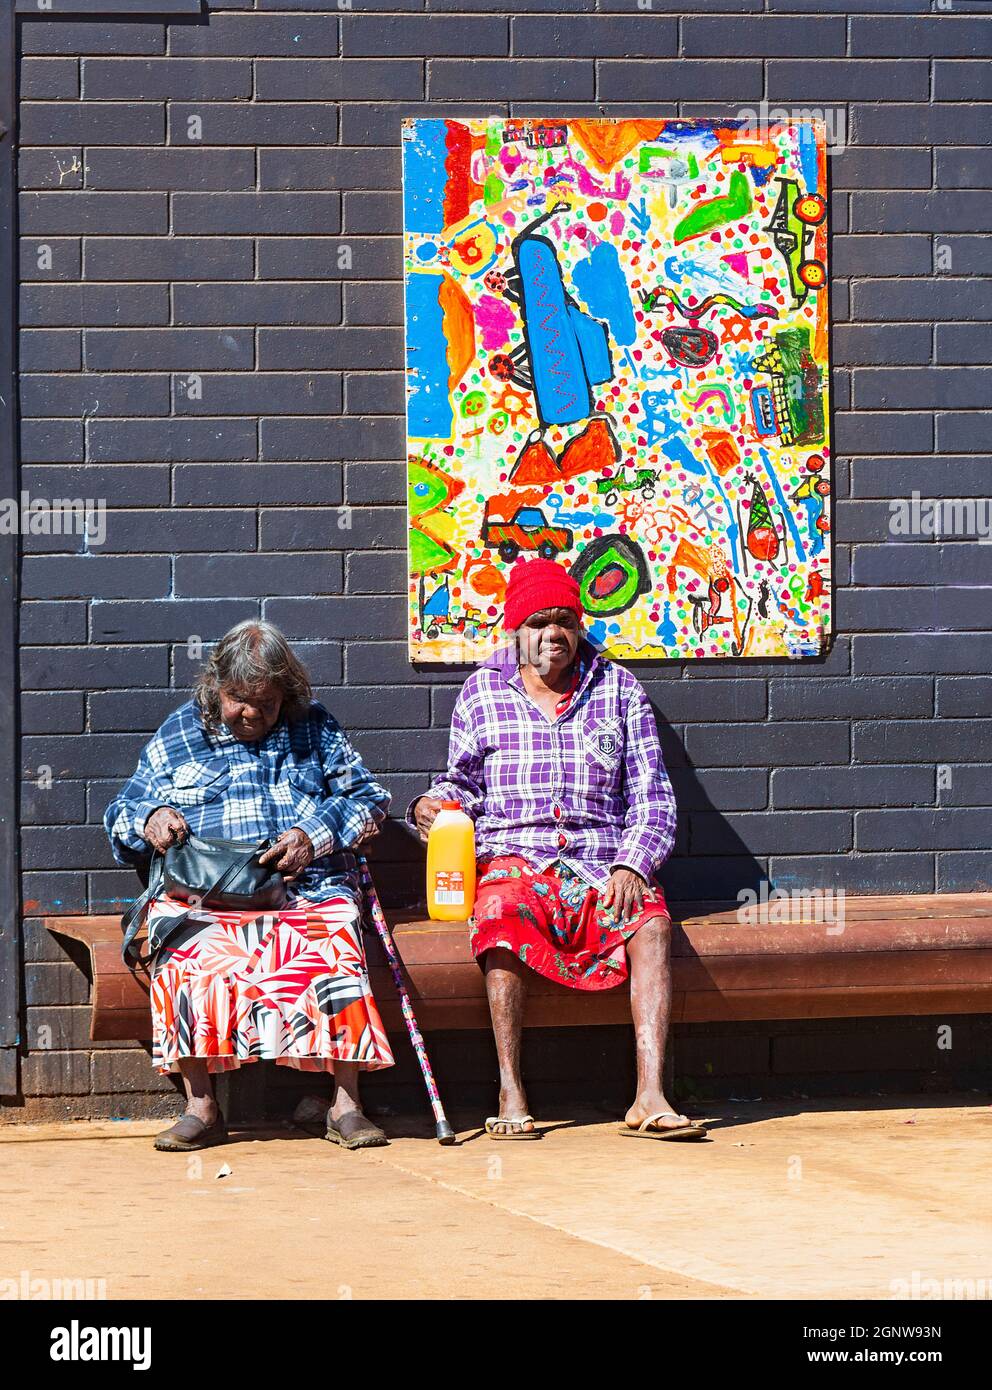 Two elderly Aboriginal women seated on a bench in front of artwork, Halls Creek, Western Australia, Australia Stock Photo